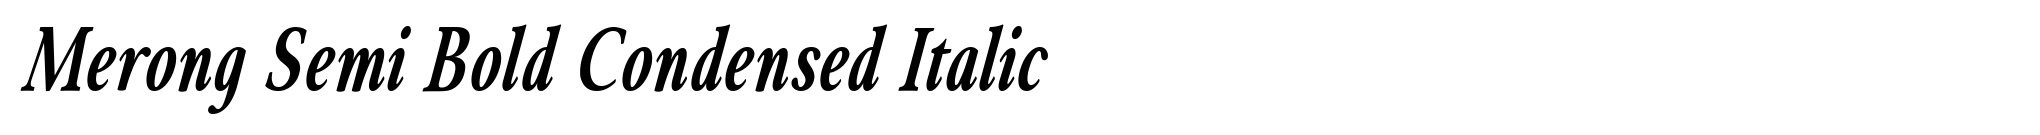 Merong Semi Bold Condensed Italic image